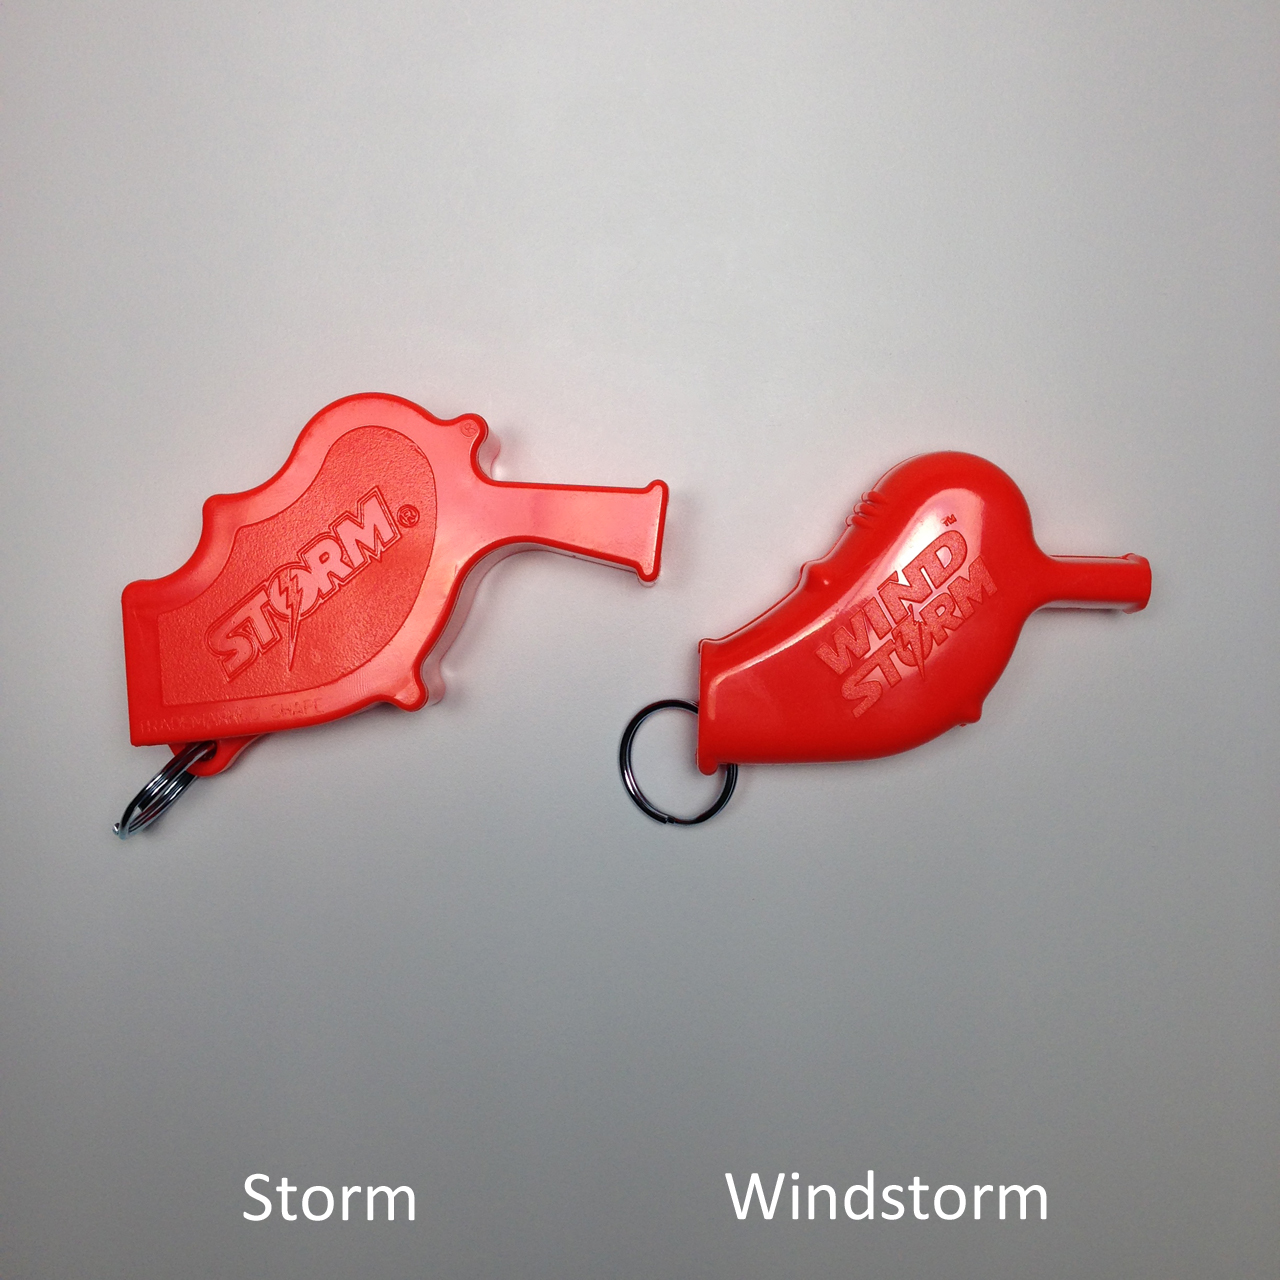 storm-windstorm-comparison1.jpg